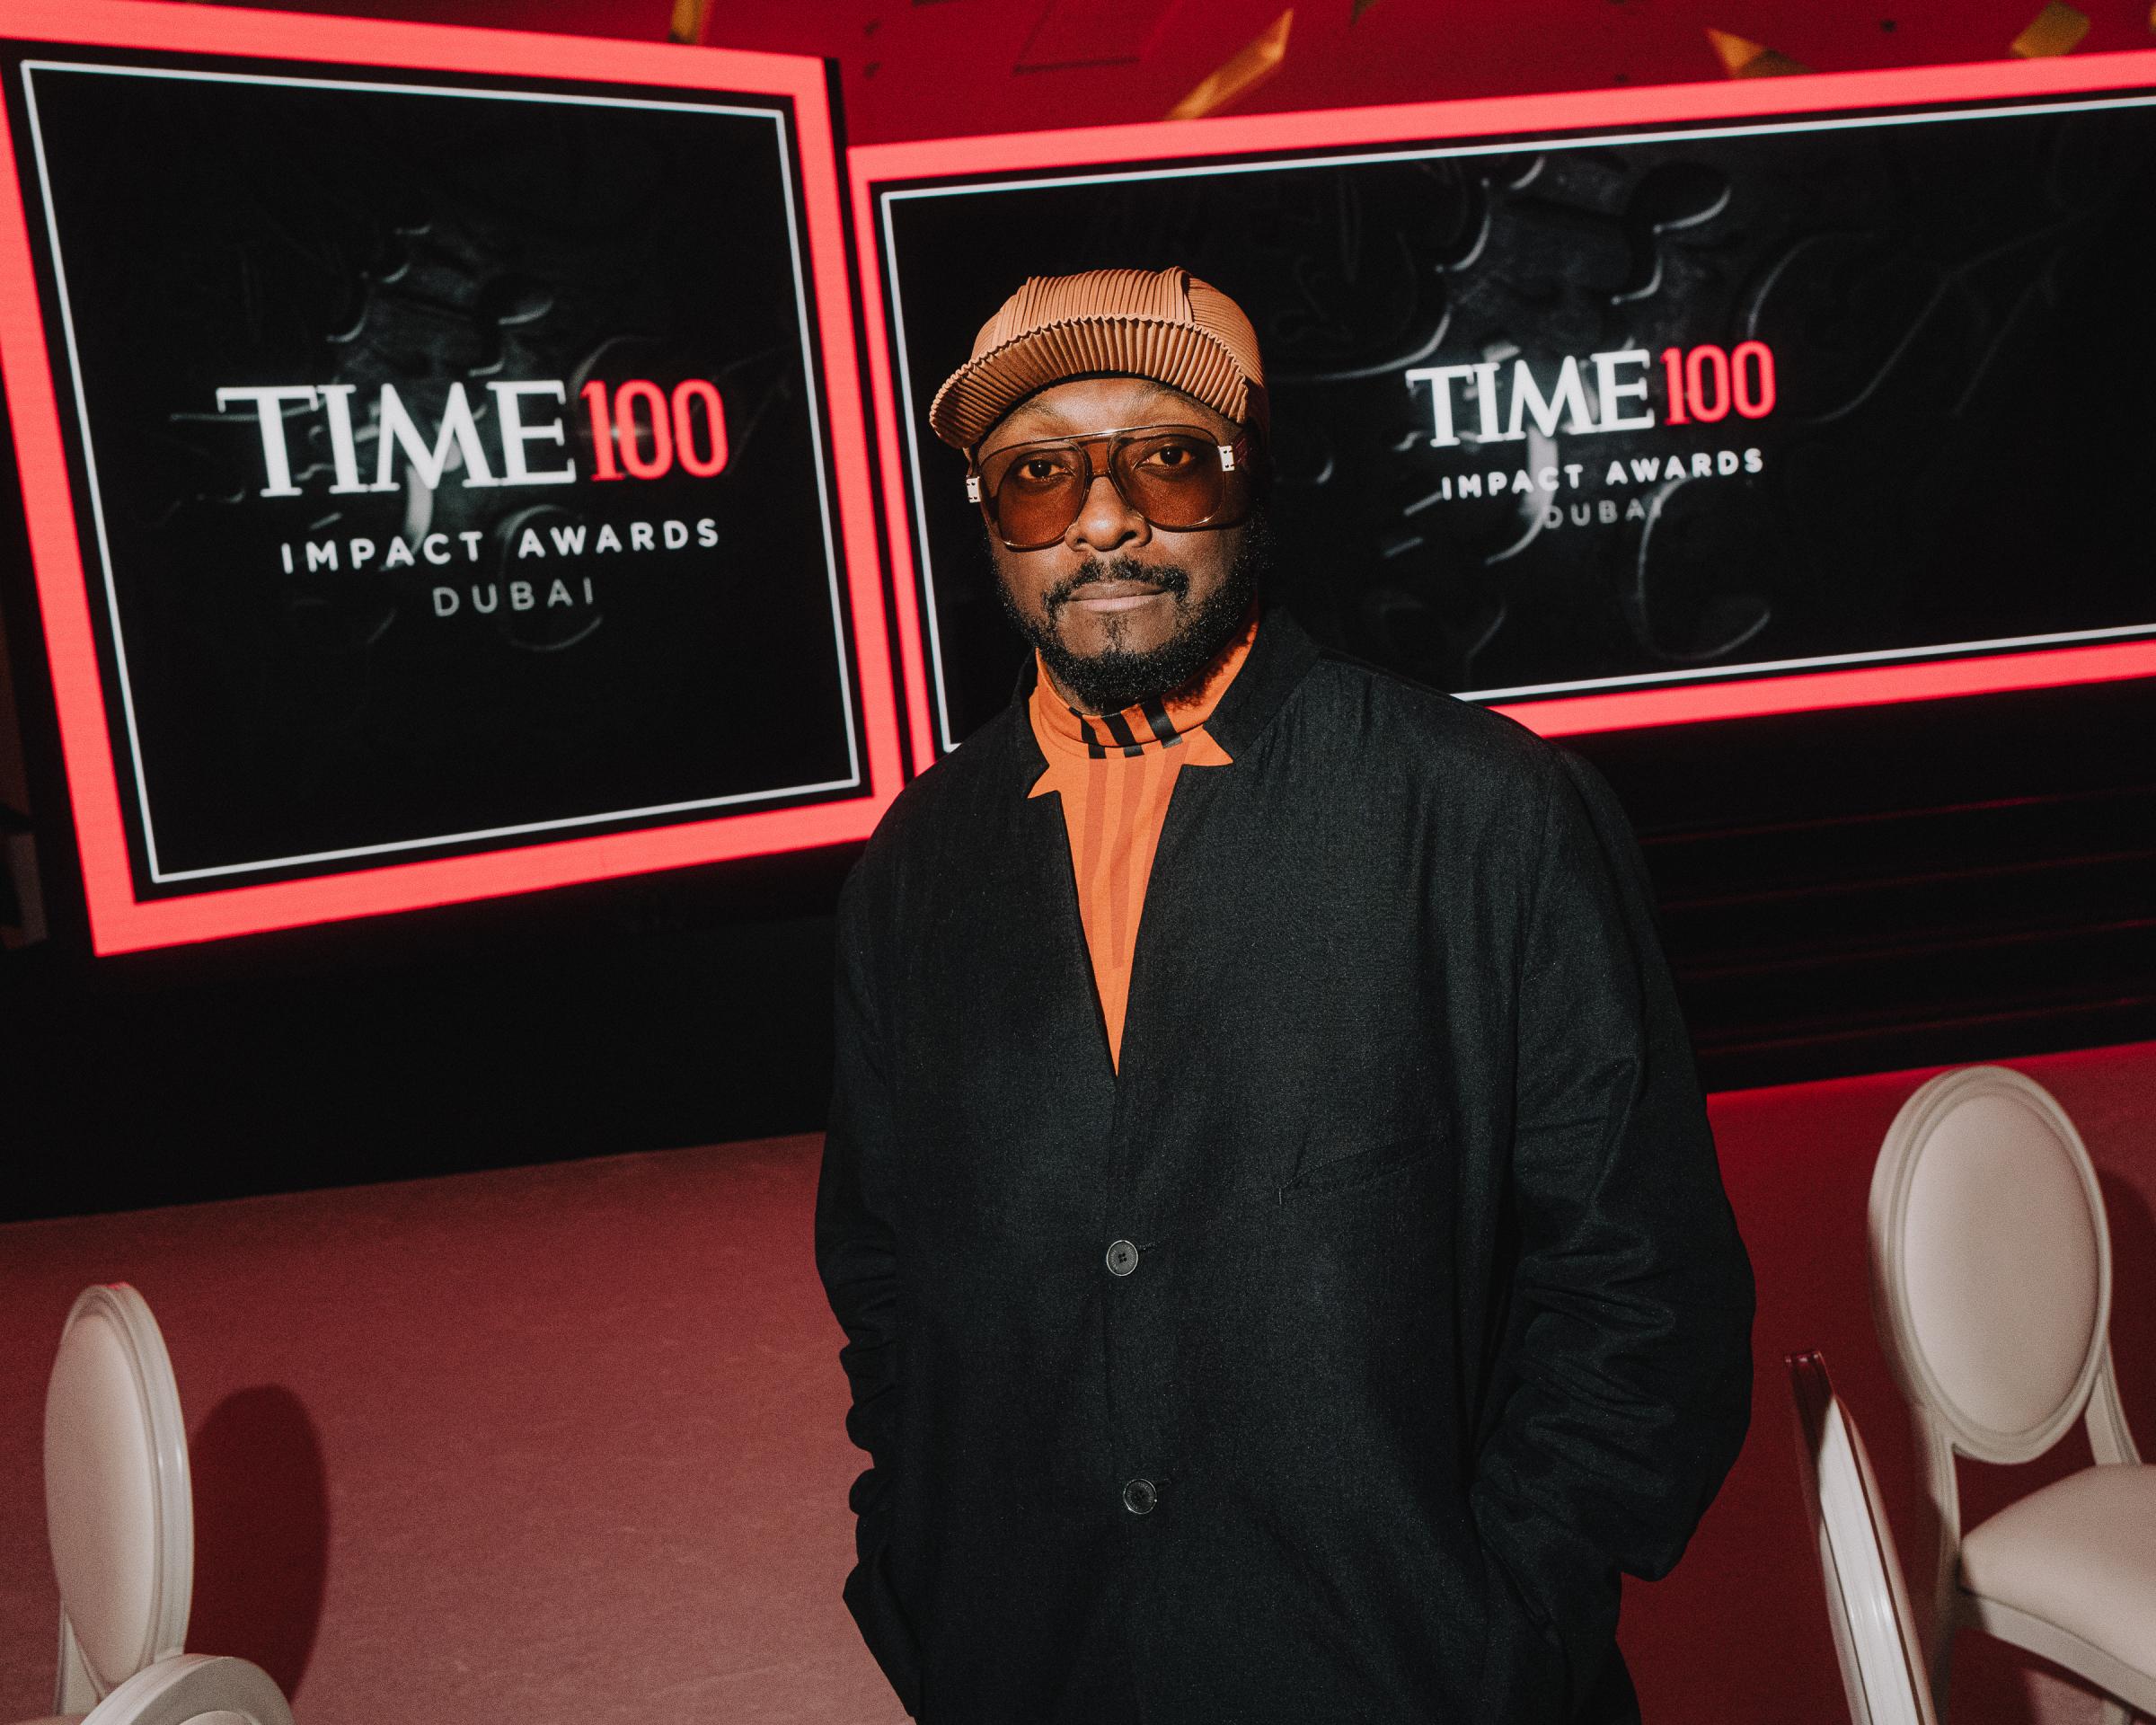 TIME100 Impact Awards Dubai | TIME